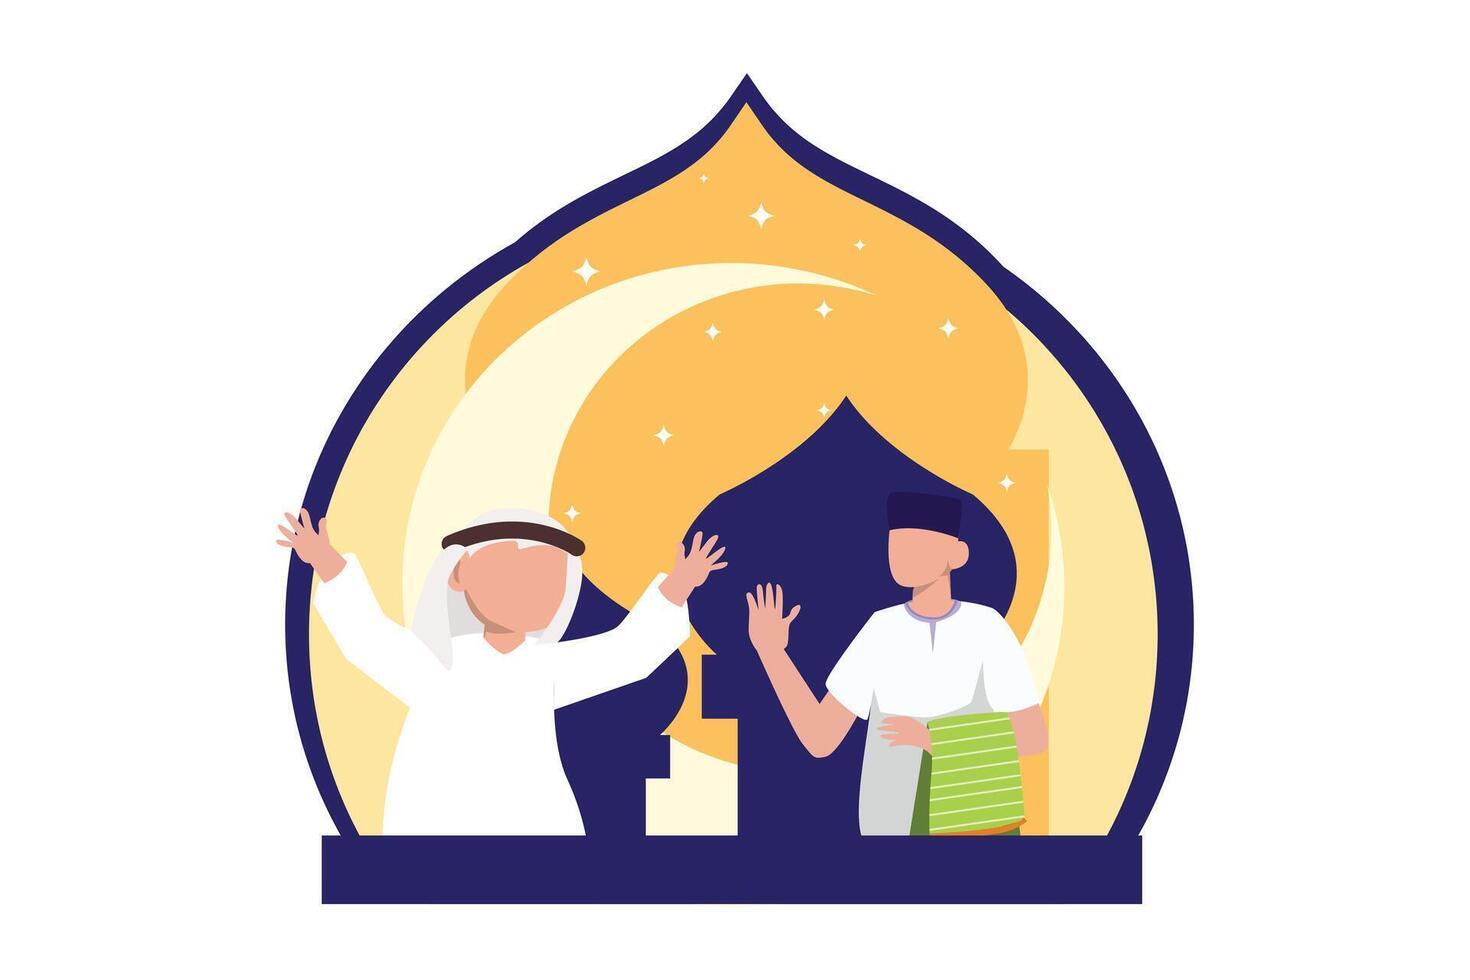 Ramadan kareem eben Design Illustration vektor